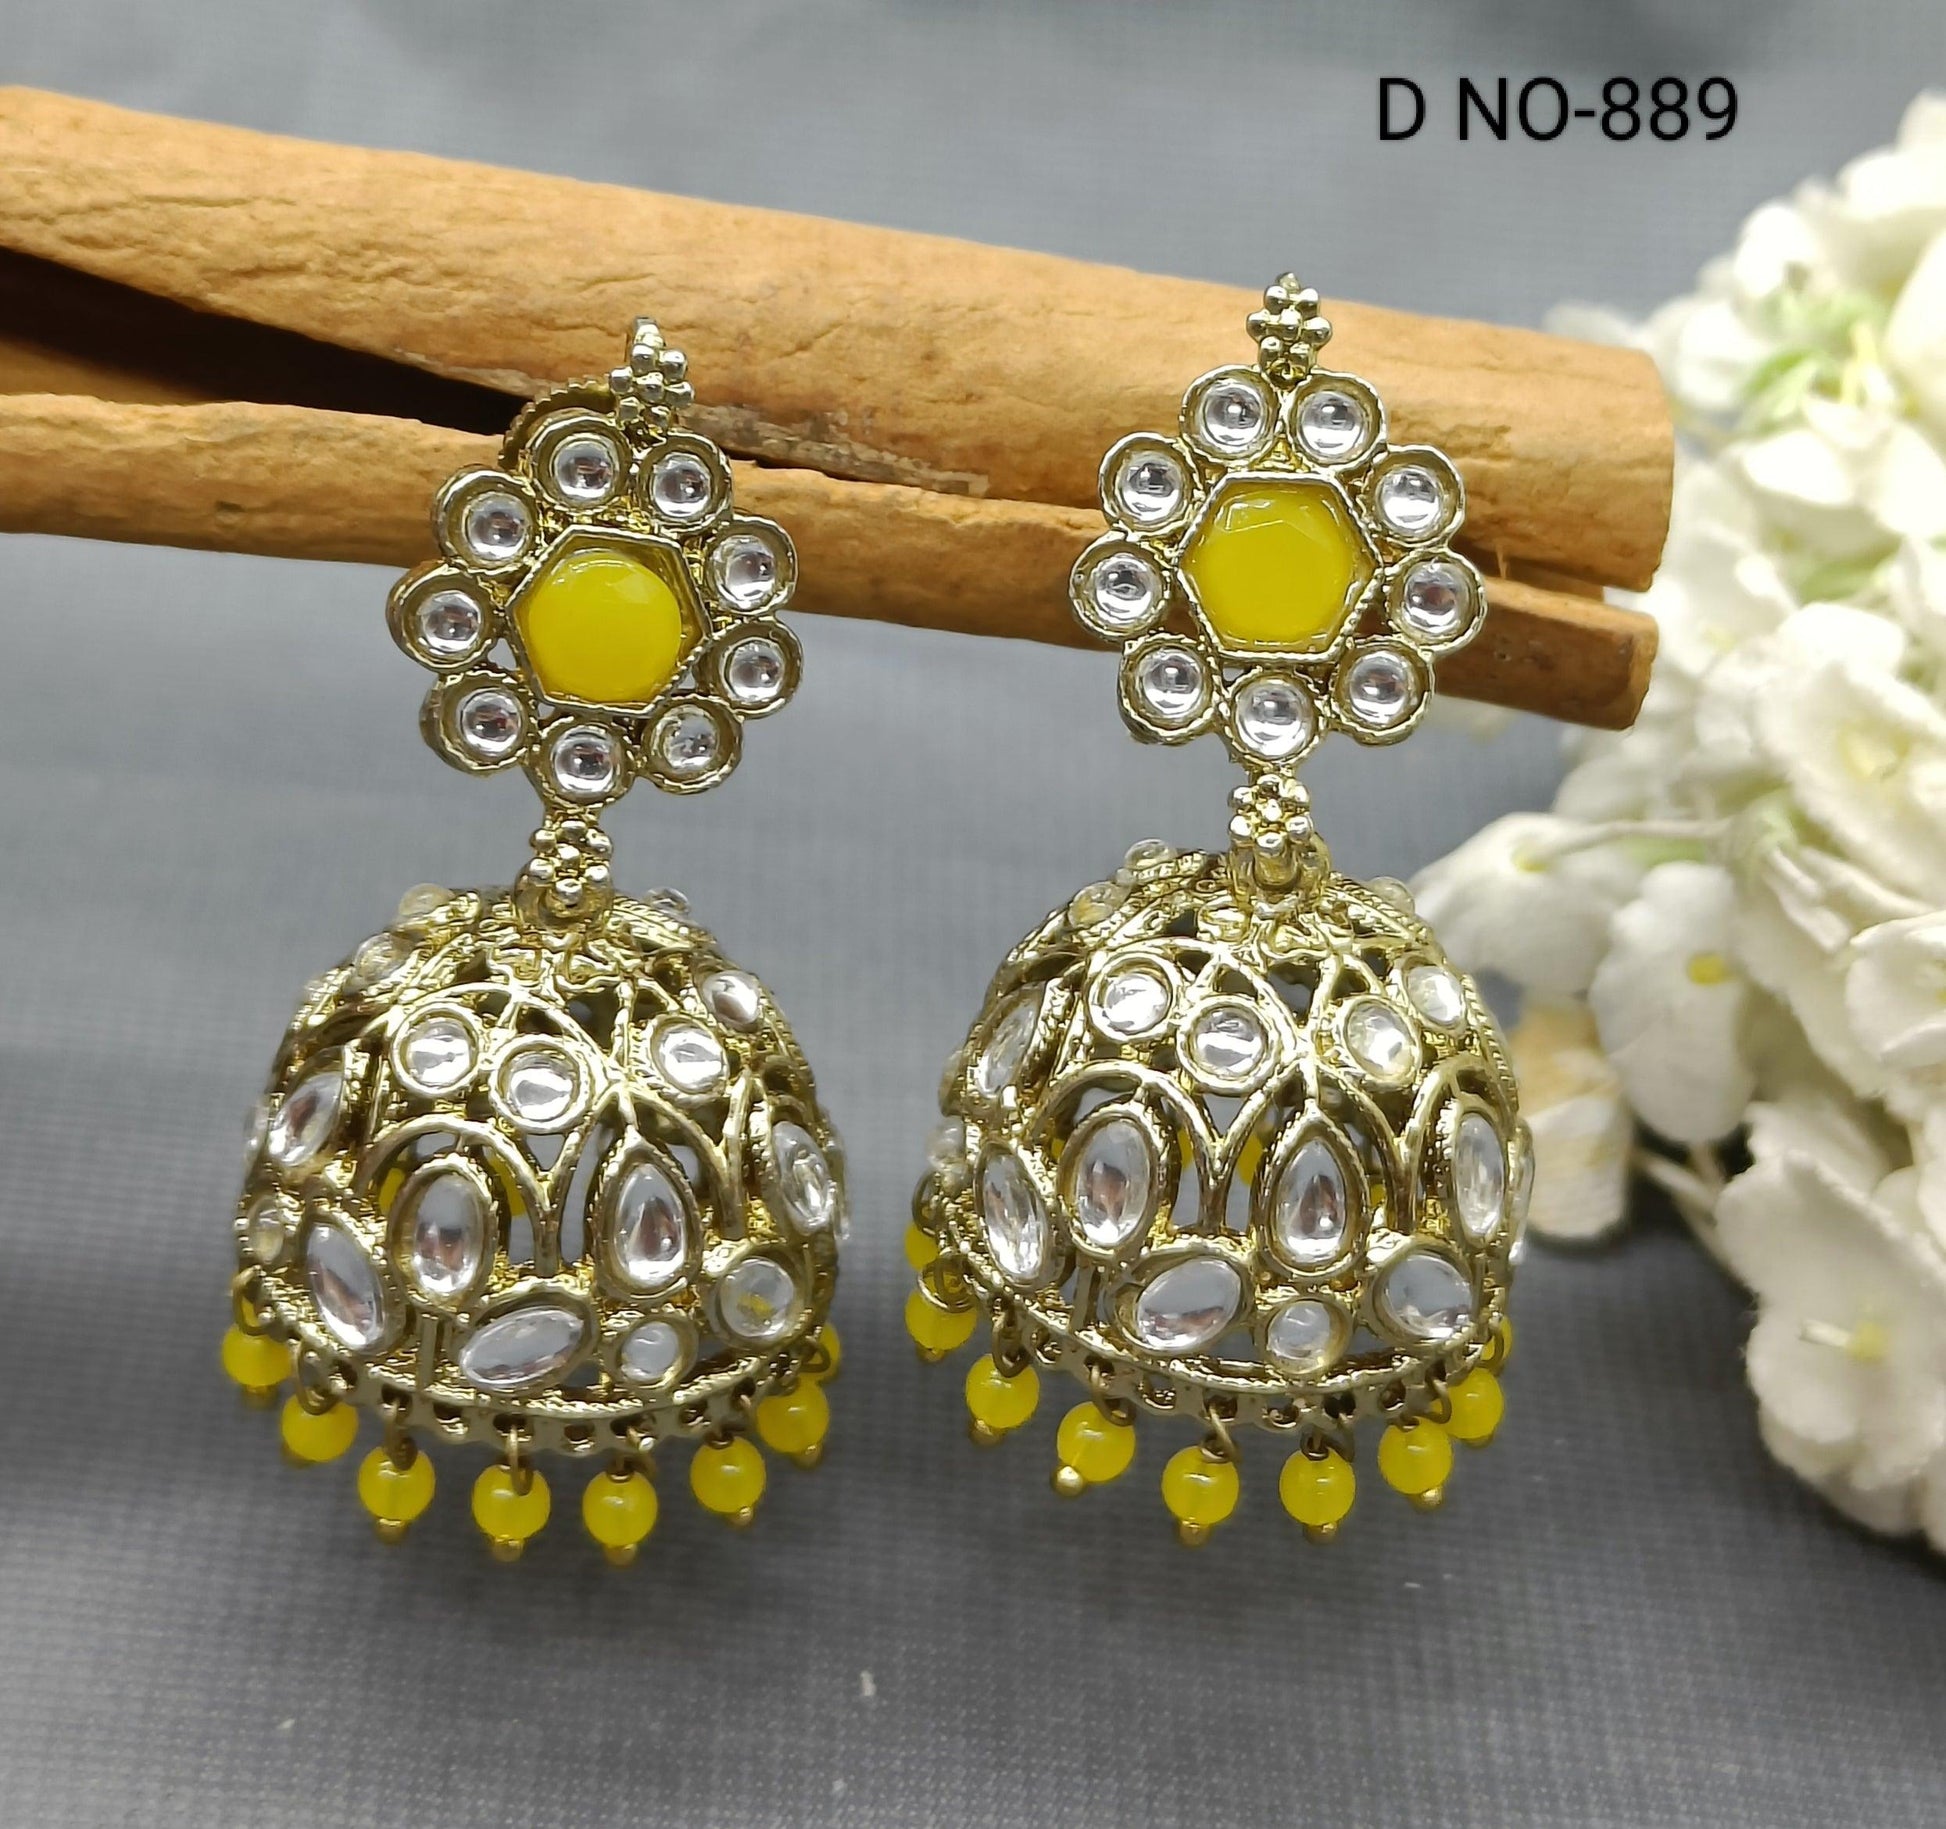 Antique Golden Kundan Jhumki Earrings Sku-889 A3 - rchiecreation